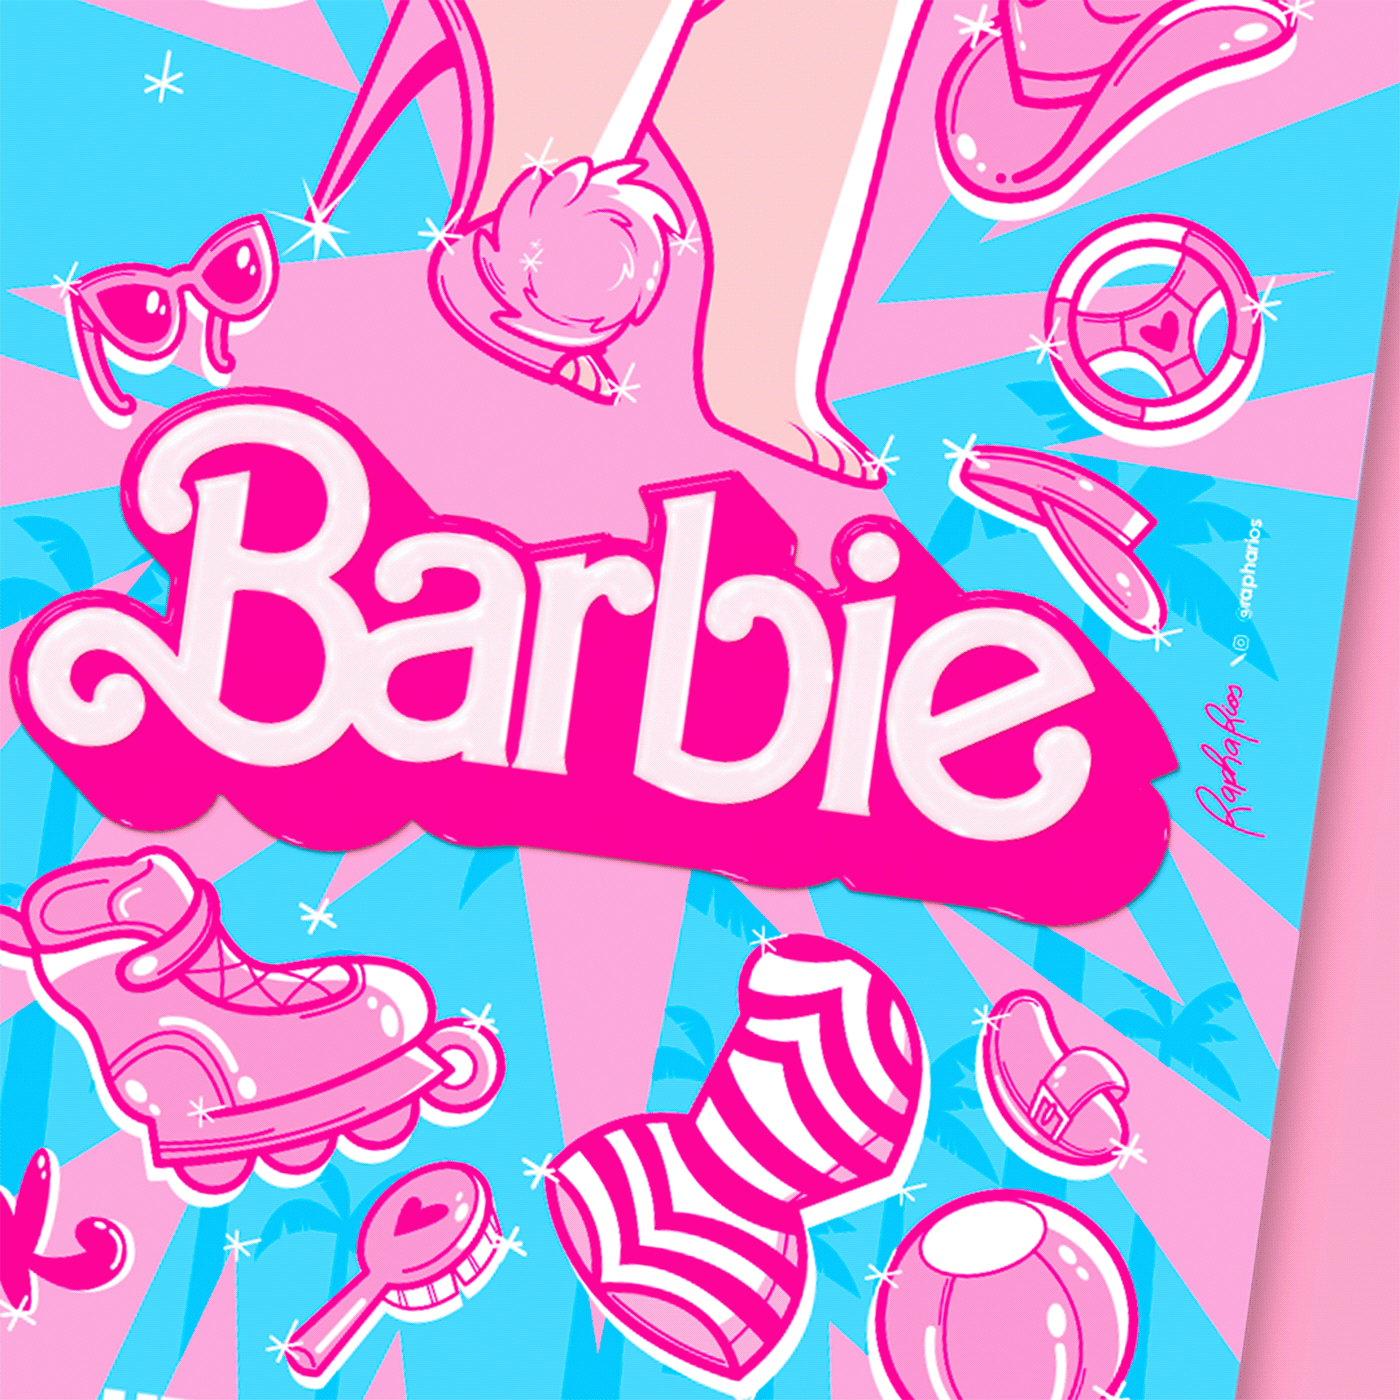 barbie mattel hbo warner bros HBO max merchandise merchandising Packaging brand identity branding 